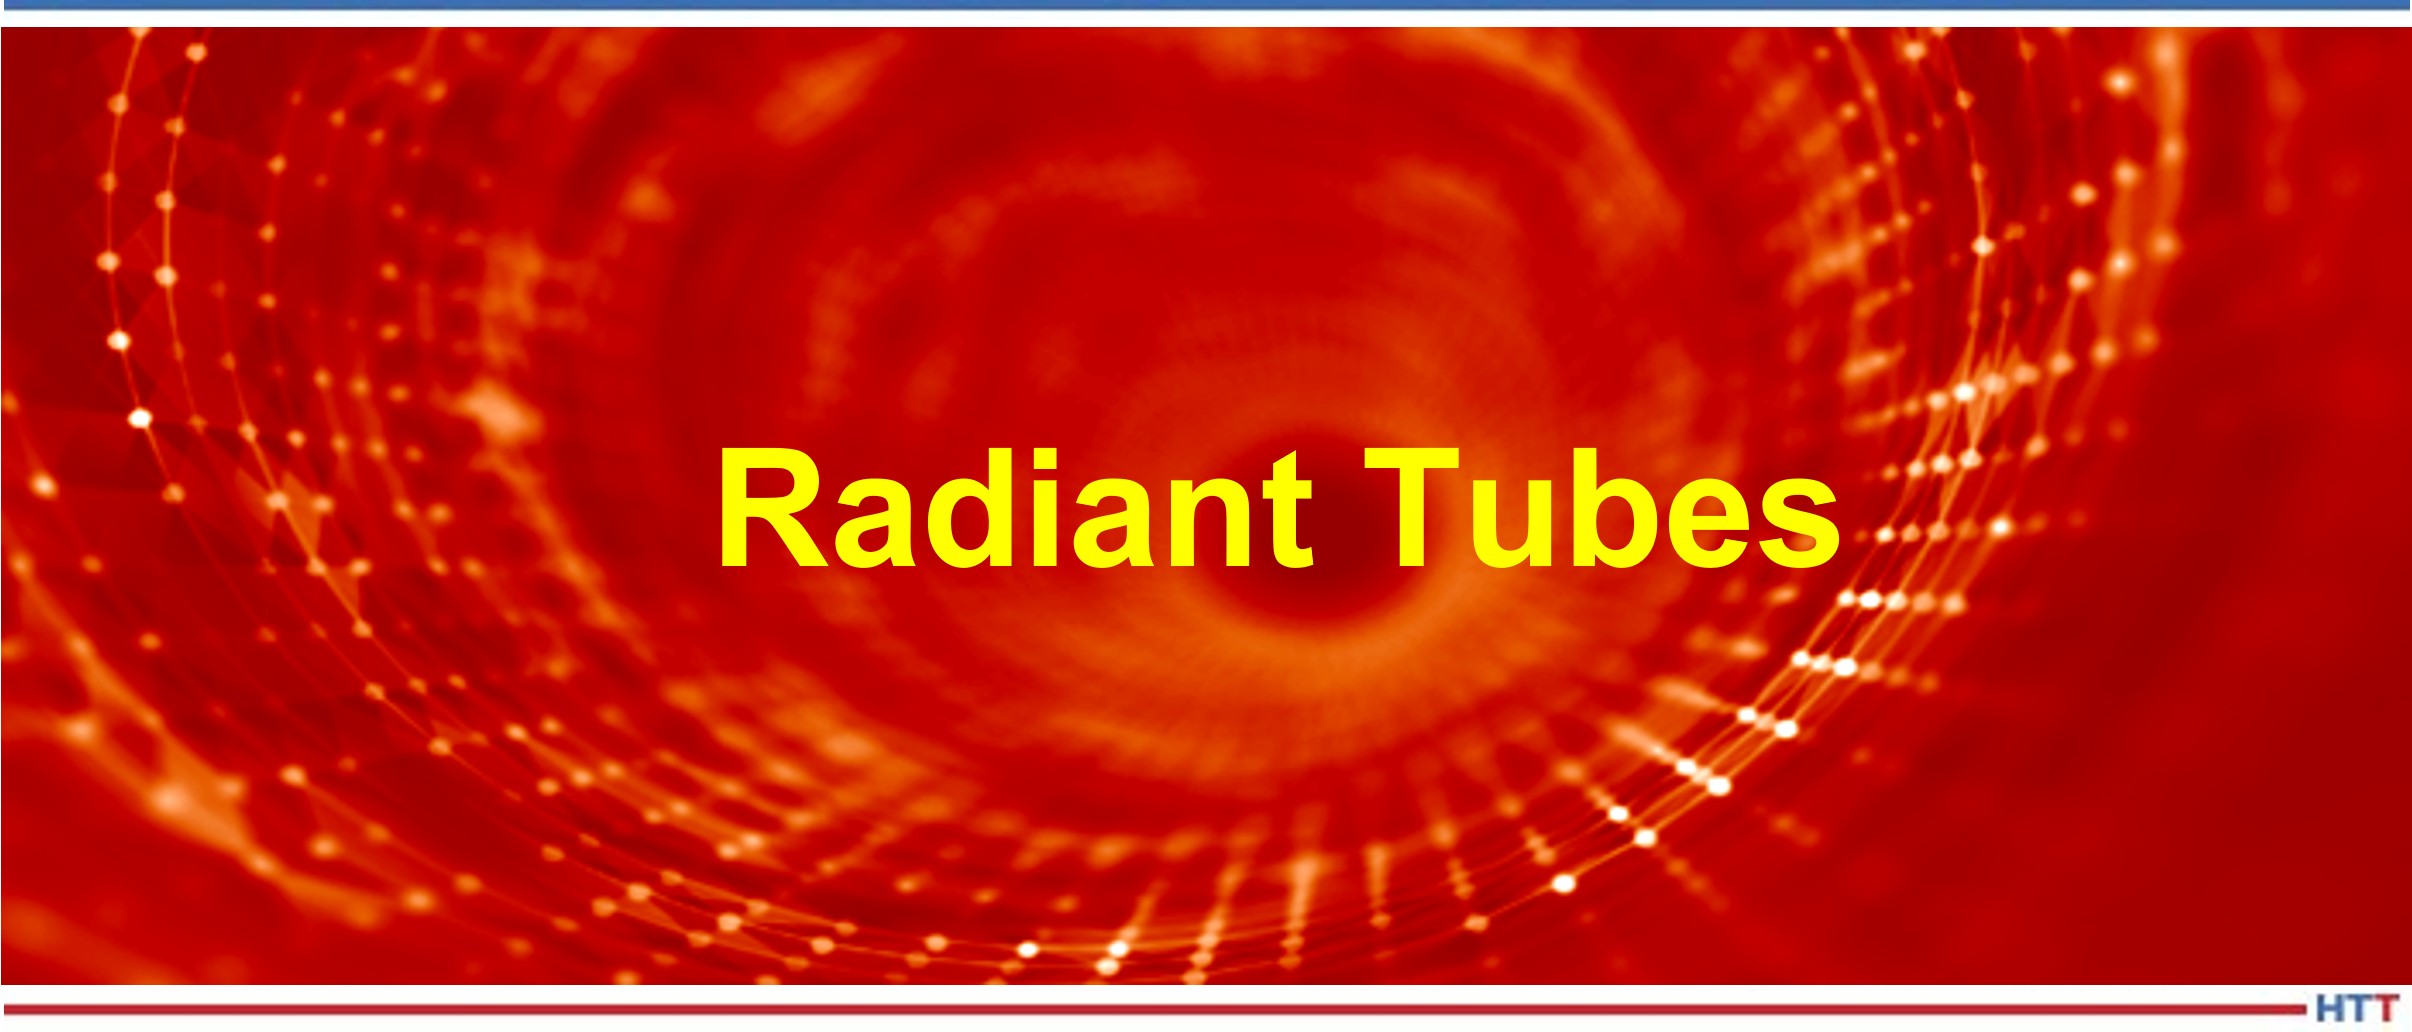 Improving the use of radiant tubes